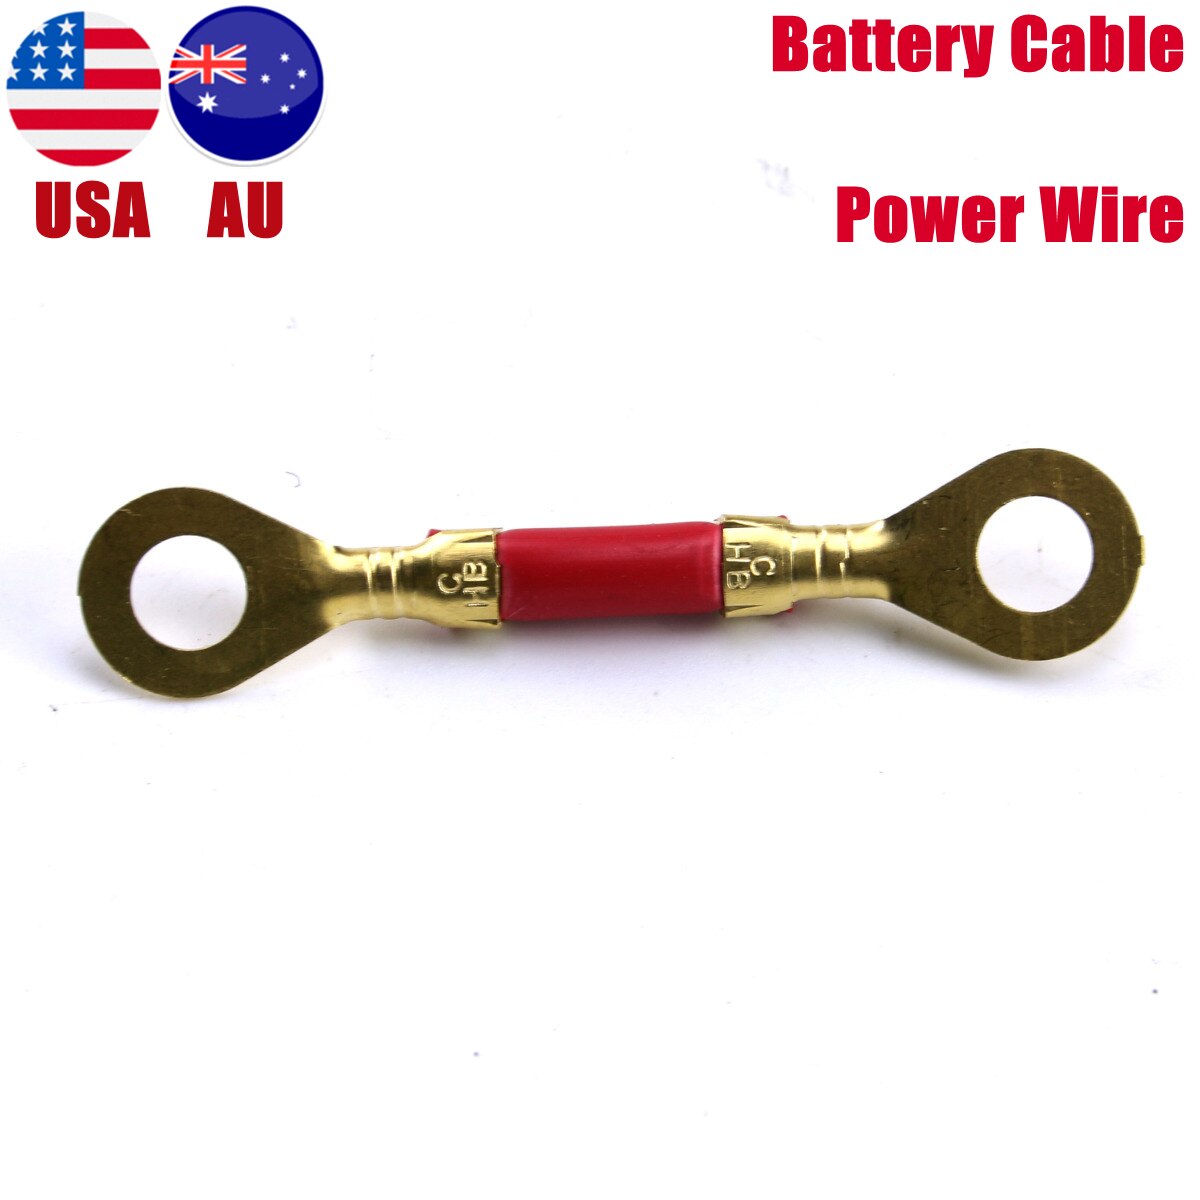 2Pcs 2 AWG Gauge Koper Batterij Kabel Power Wire Auto, Marine, Omvormer, RV, Solar